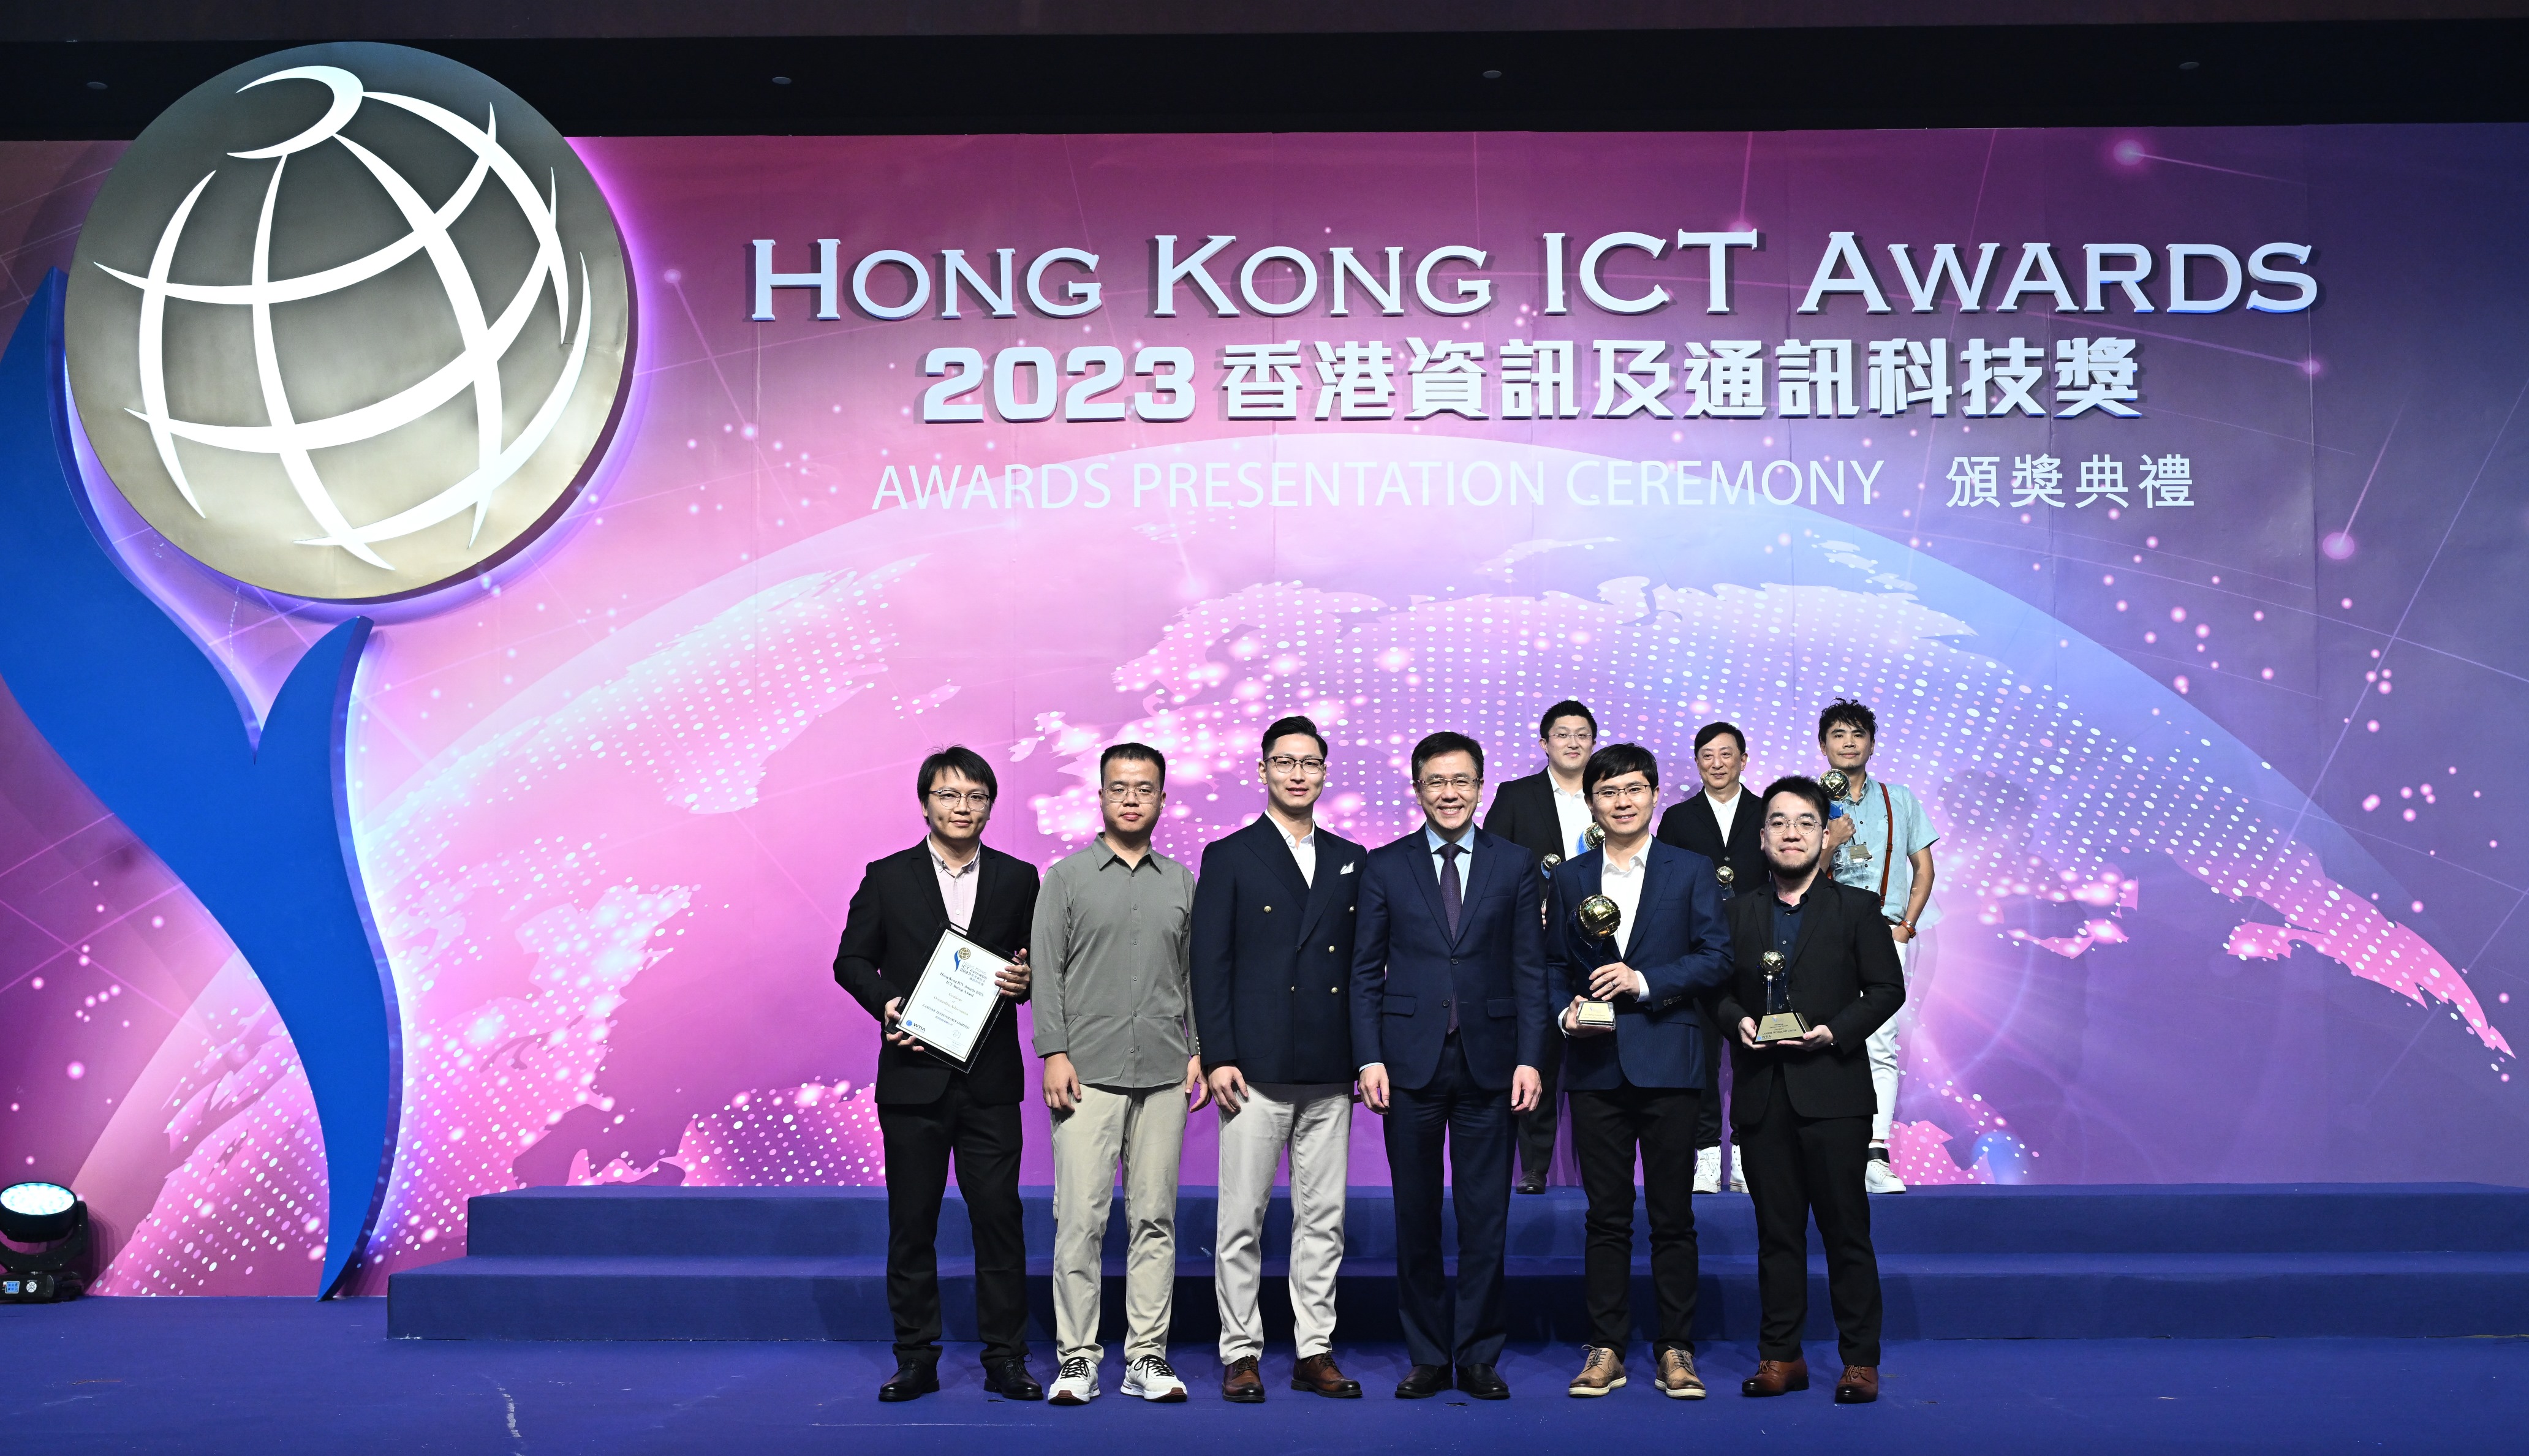 Hong Kong ICT Awards 2023 ICT Startup Grand Award Winner